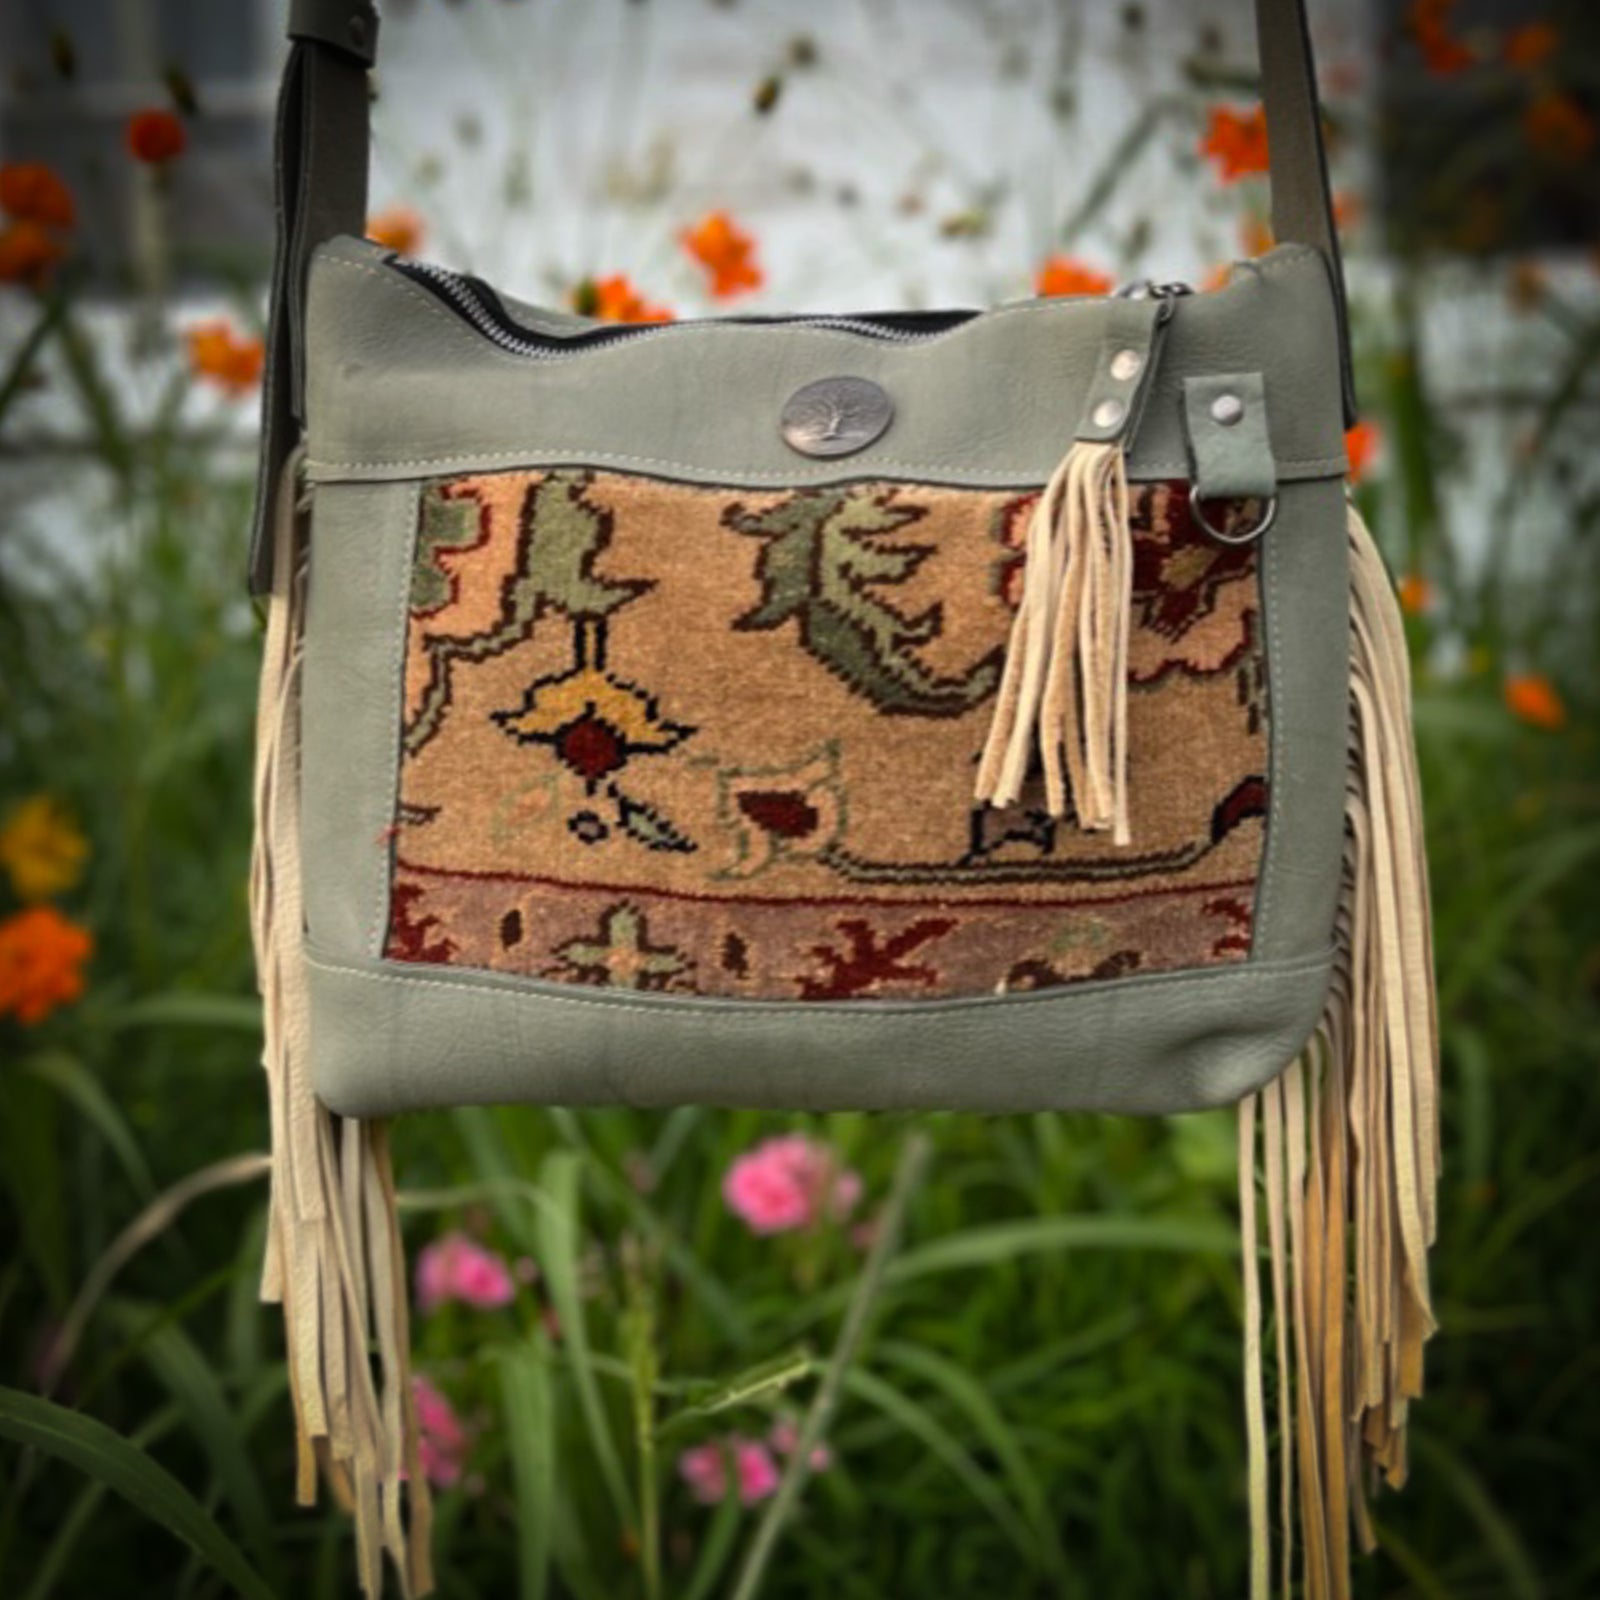 Whimsical Wilderness Watercolor Garden Husky Shoulder Bag Purse